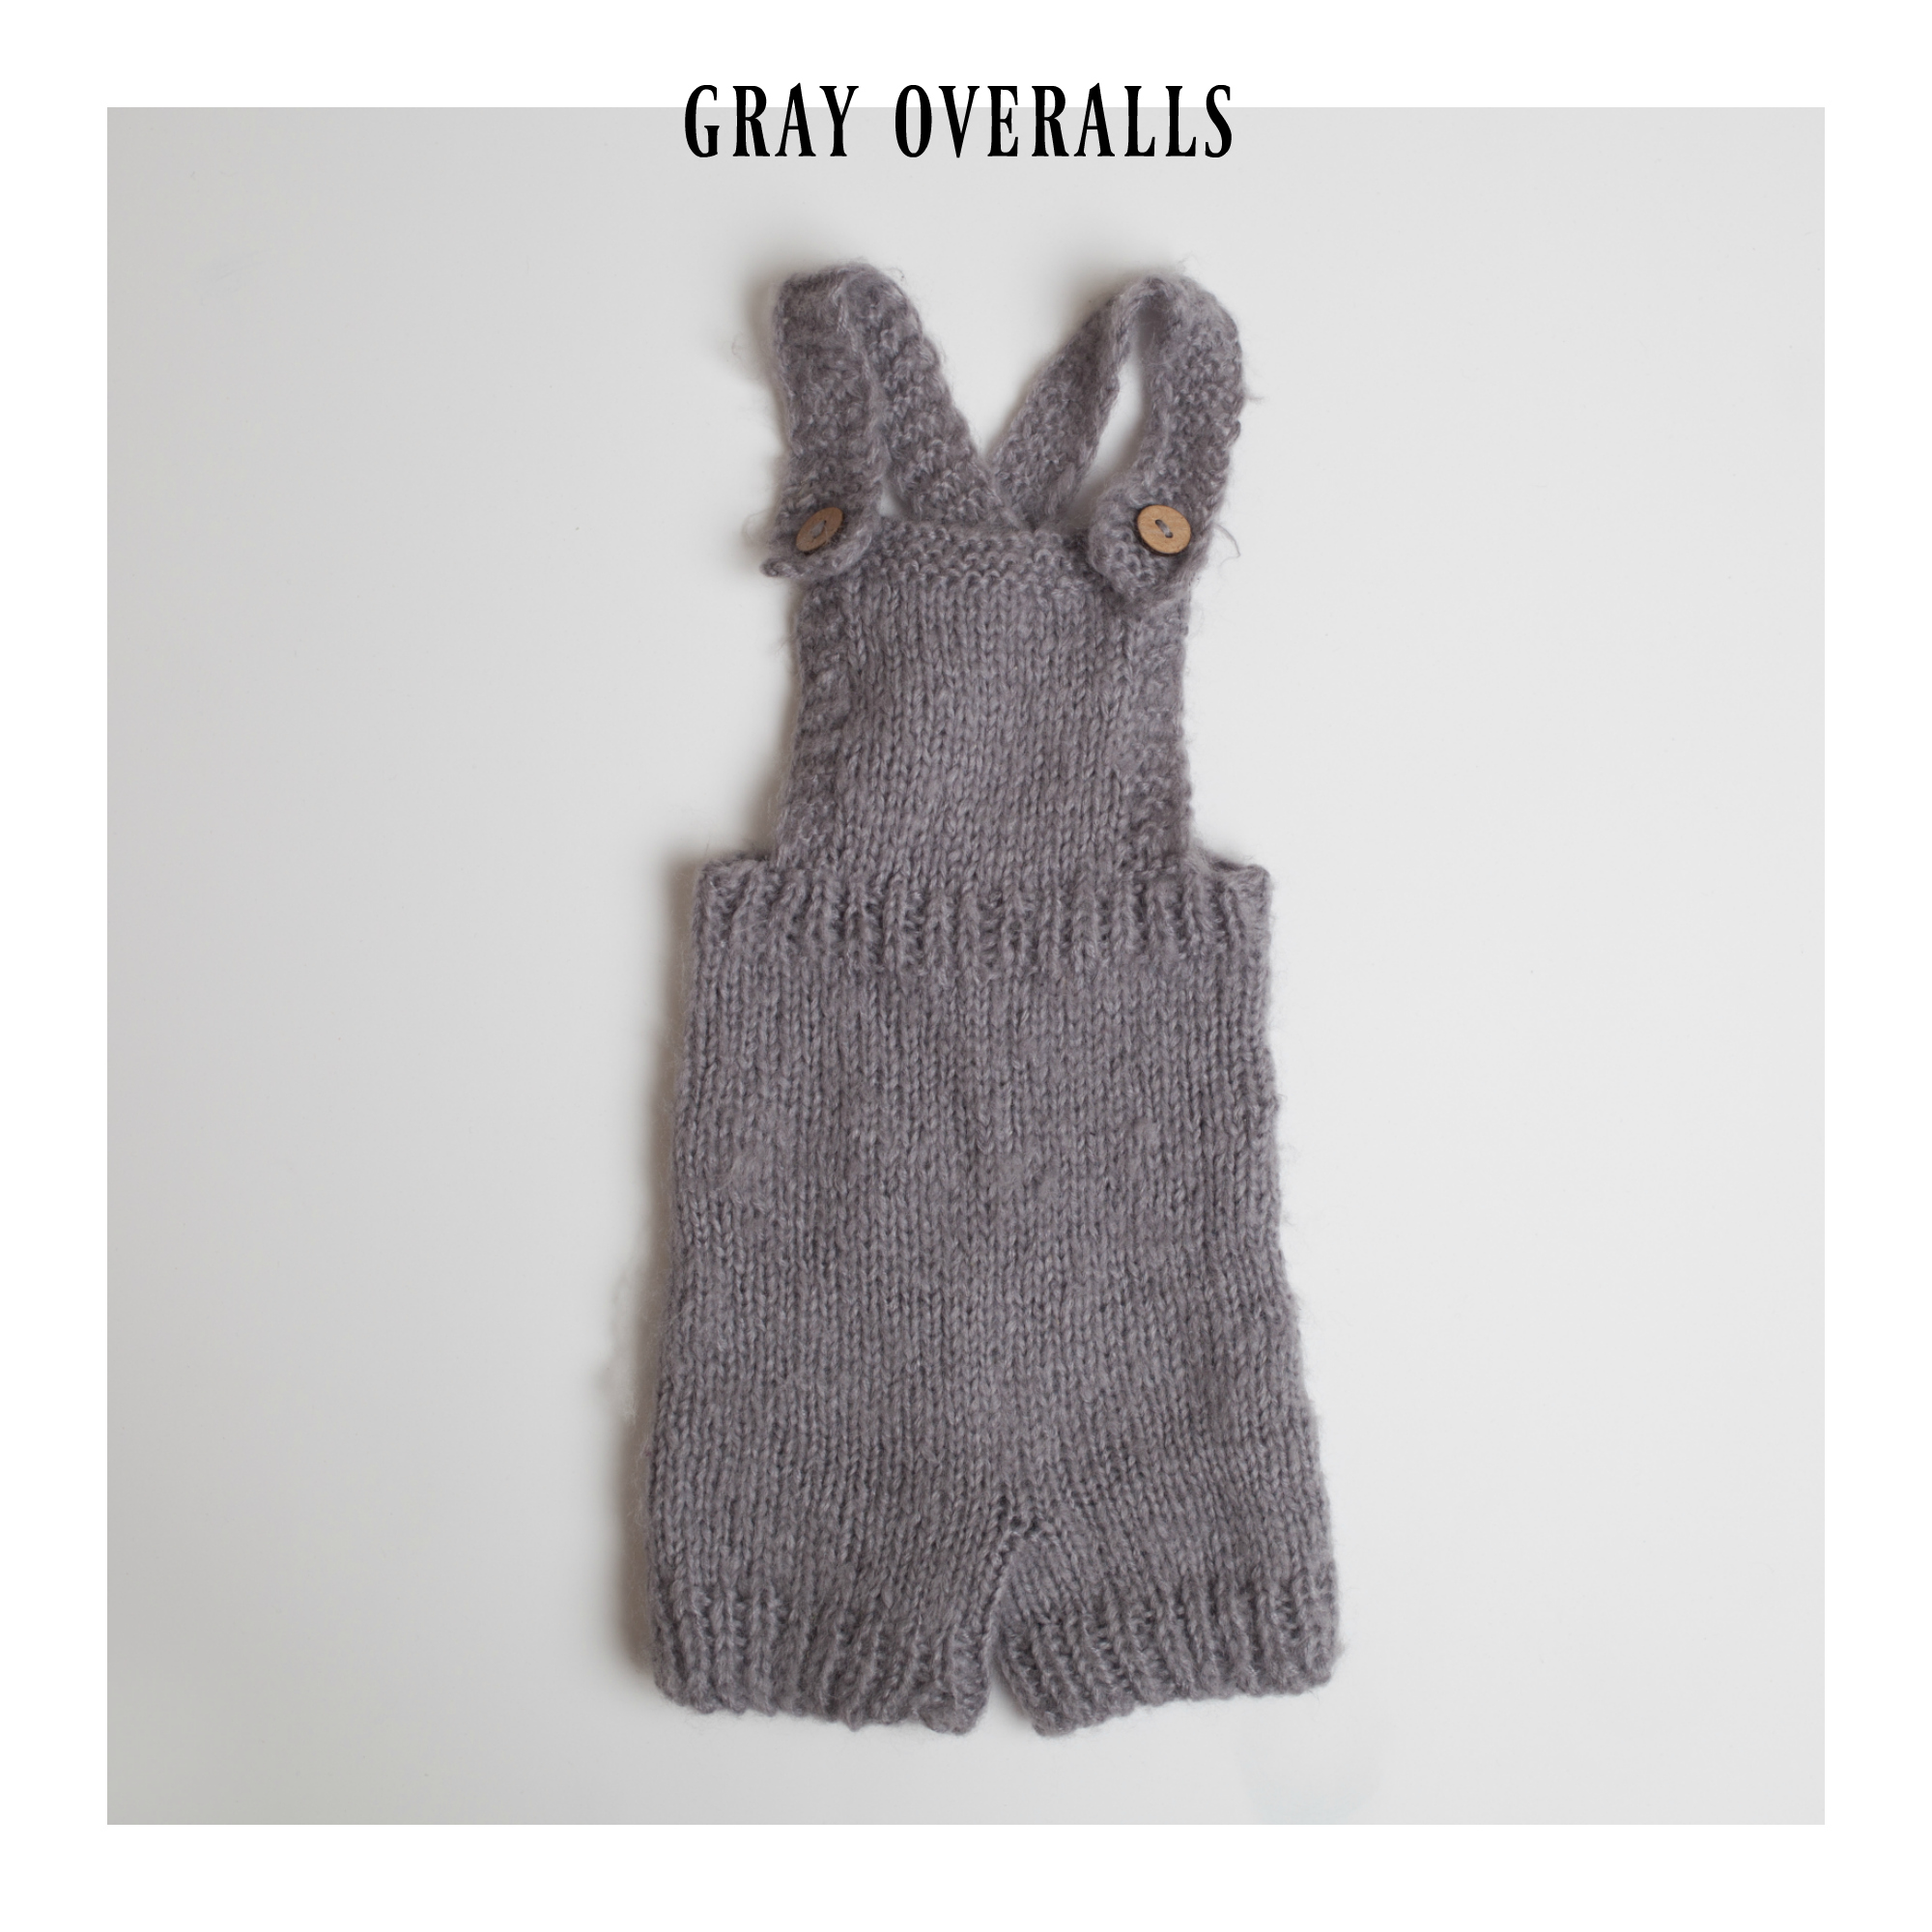 gray overalls.jpg